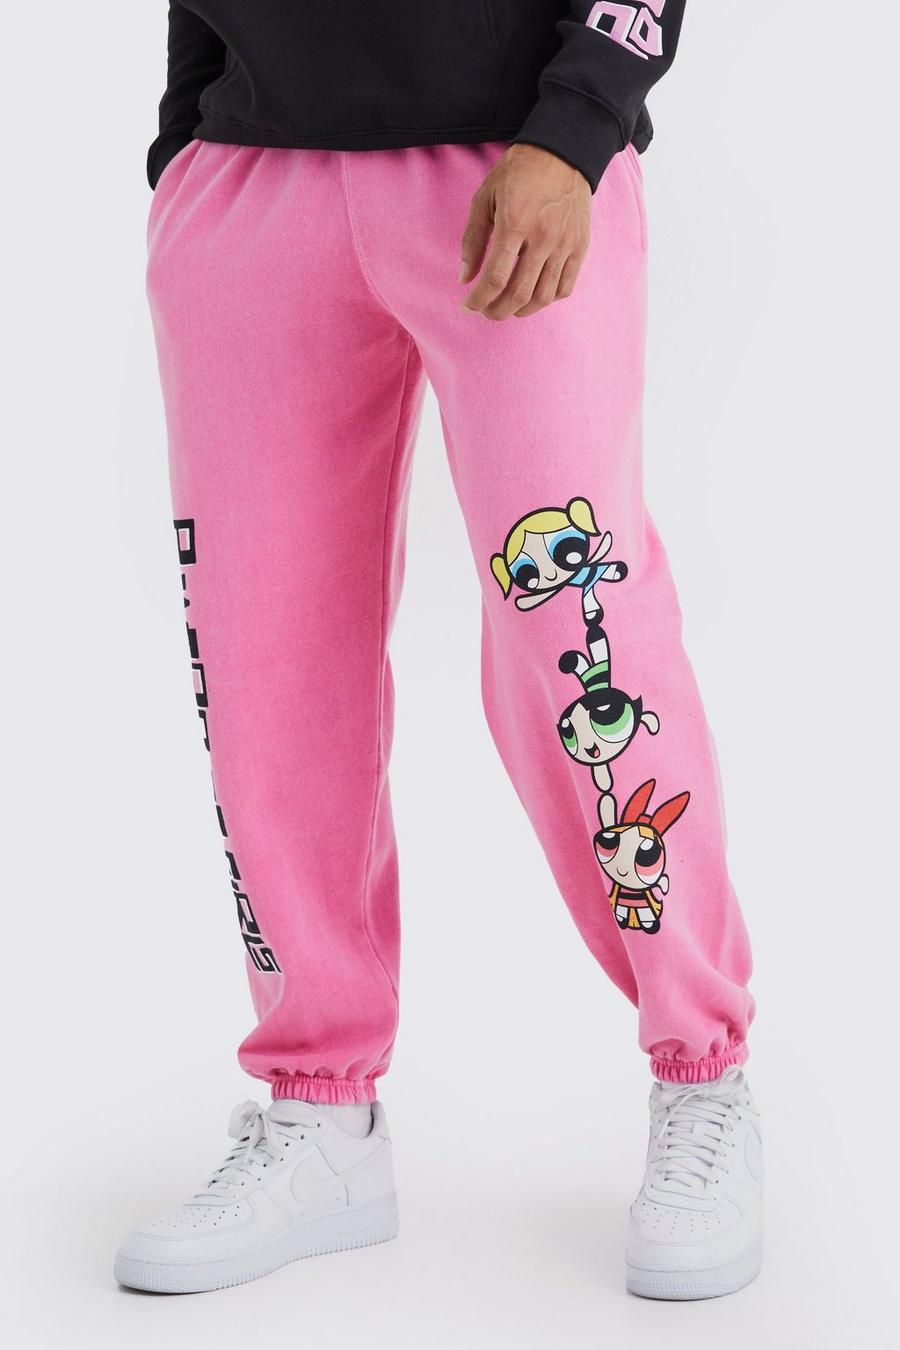 Pantaloni tuta ufficiale delle Superchicche, Pink image number 1